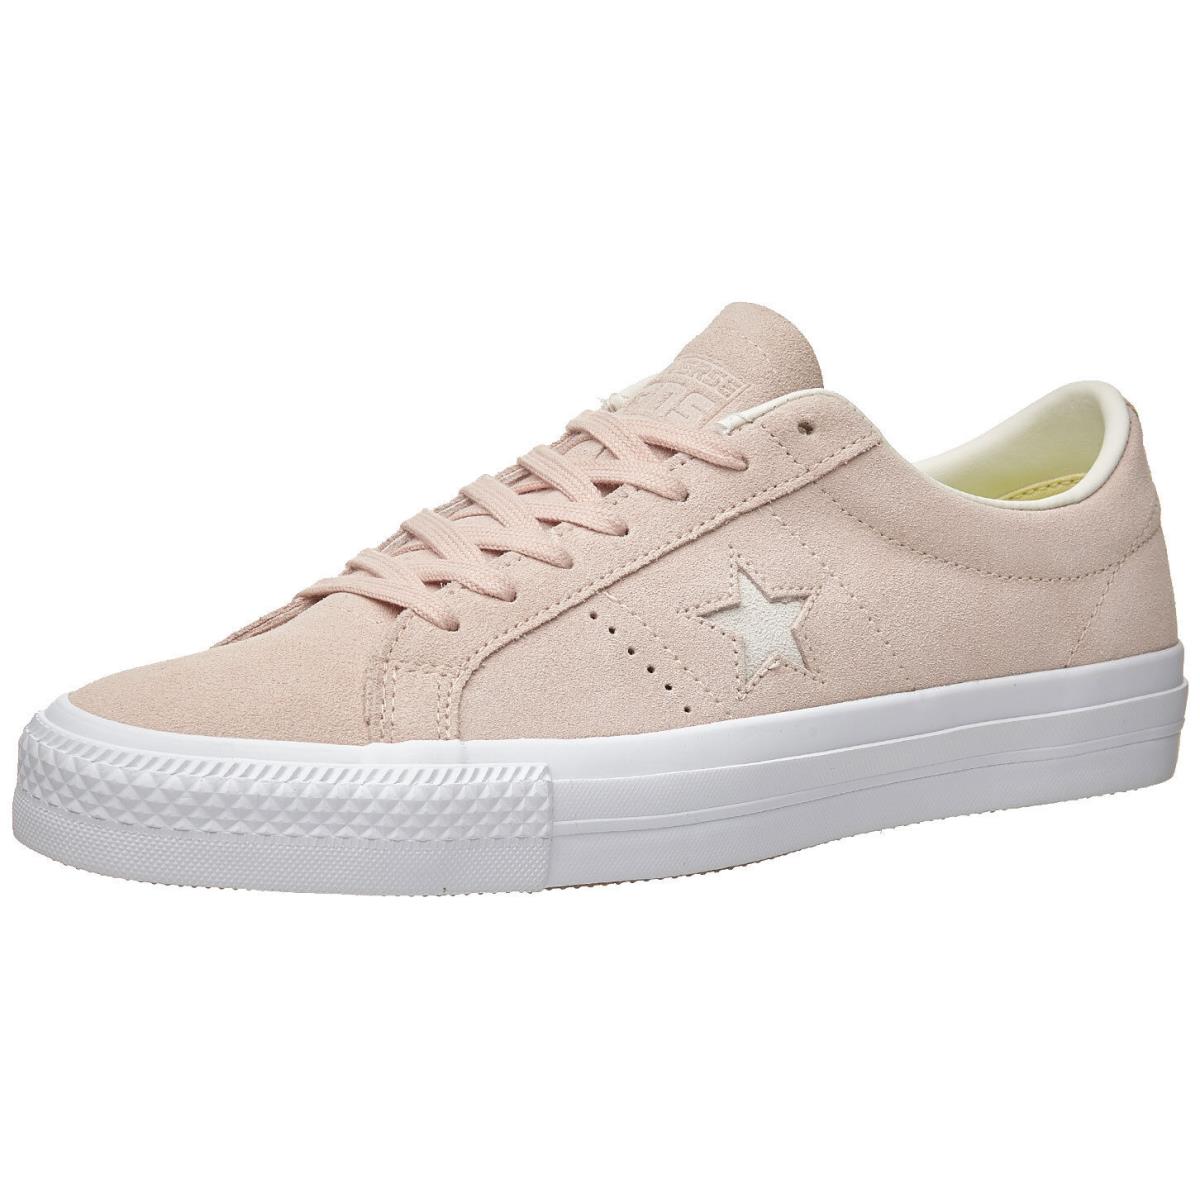 Converse One Star Pro OX Dusk Pink Egret White 157892C Unisex 159 Men`s Shoes - Dust Pink/Egret/White